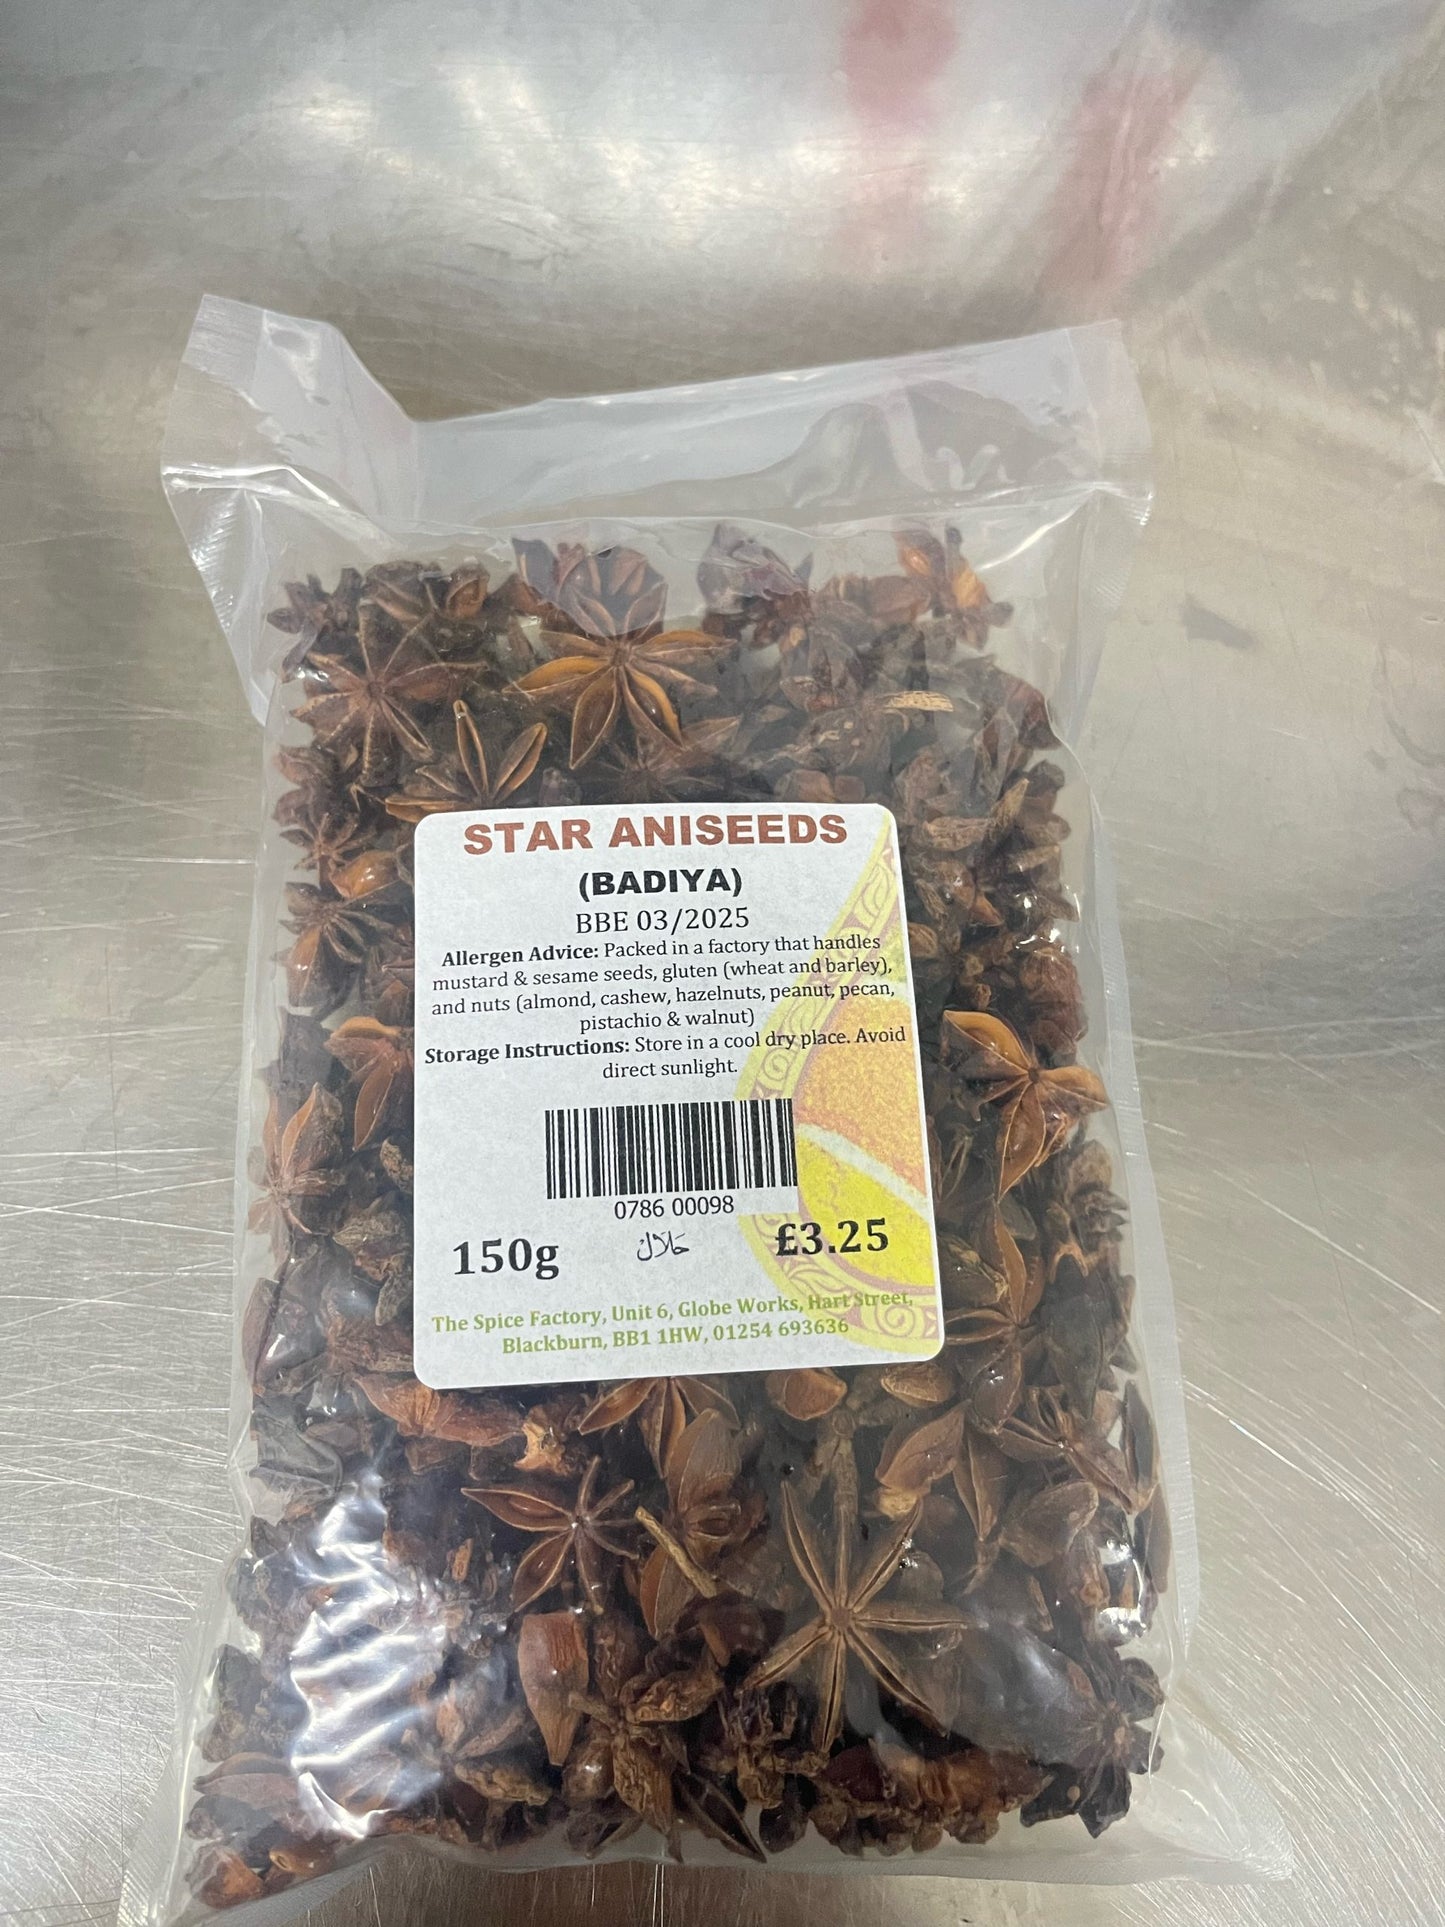 Spice Factory- Star Aniseeds (badiya)